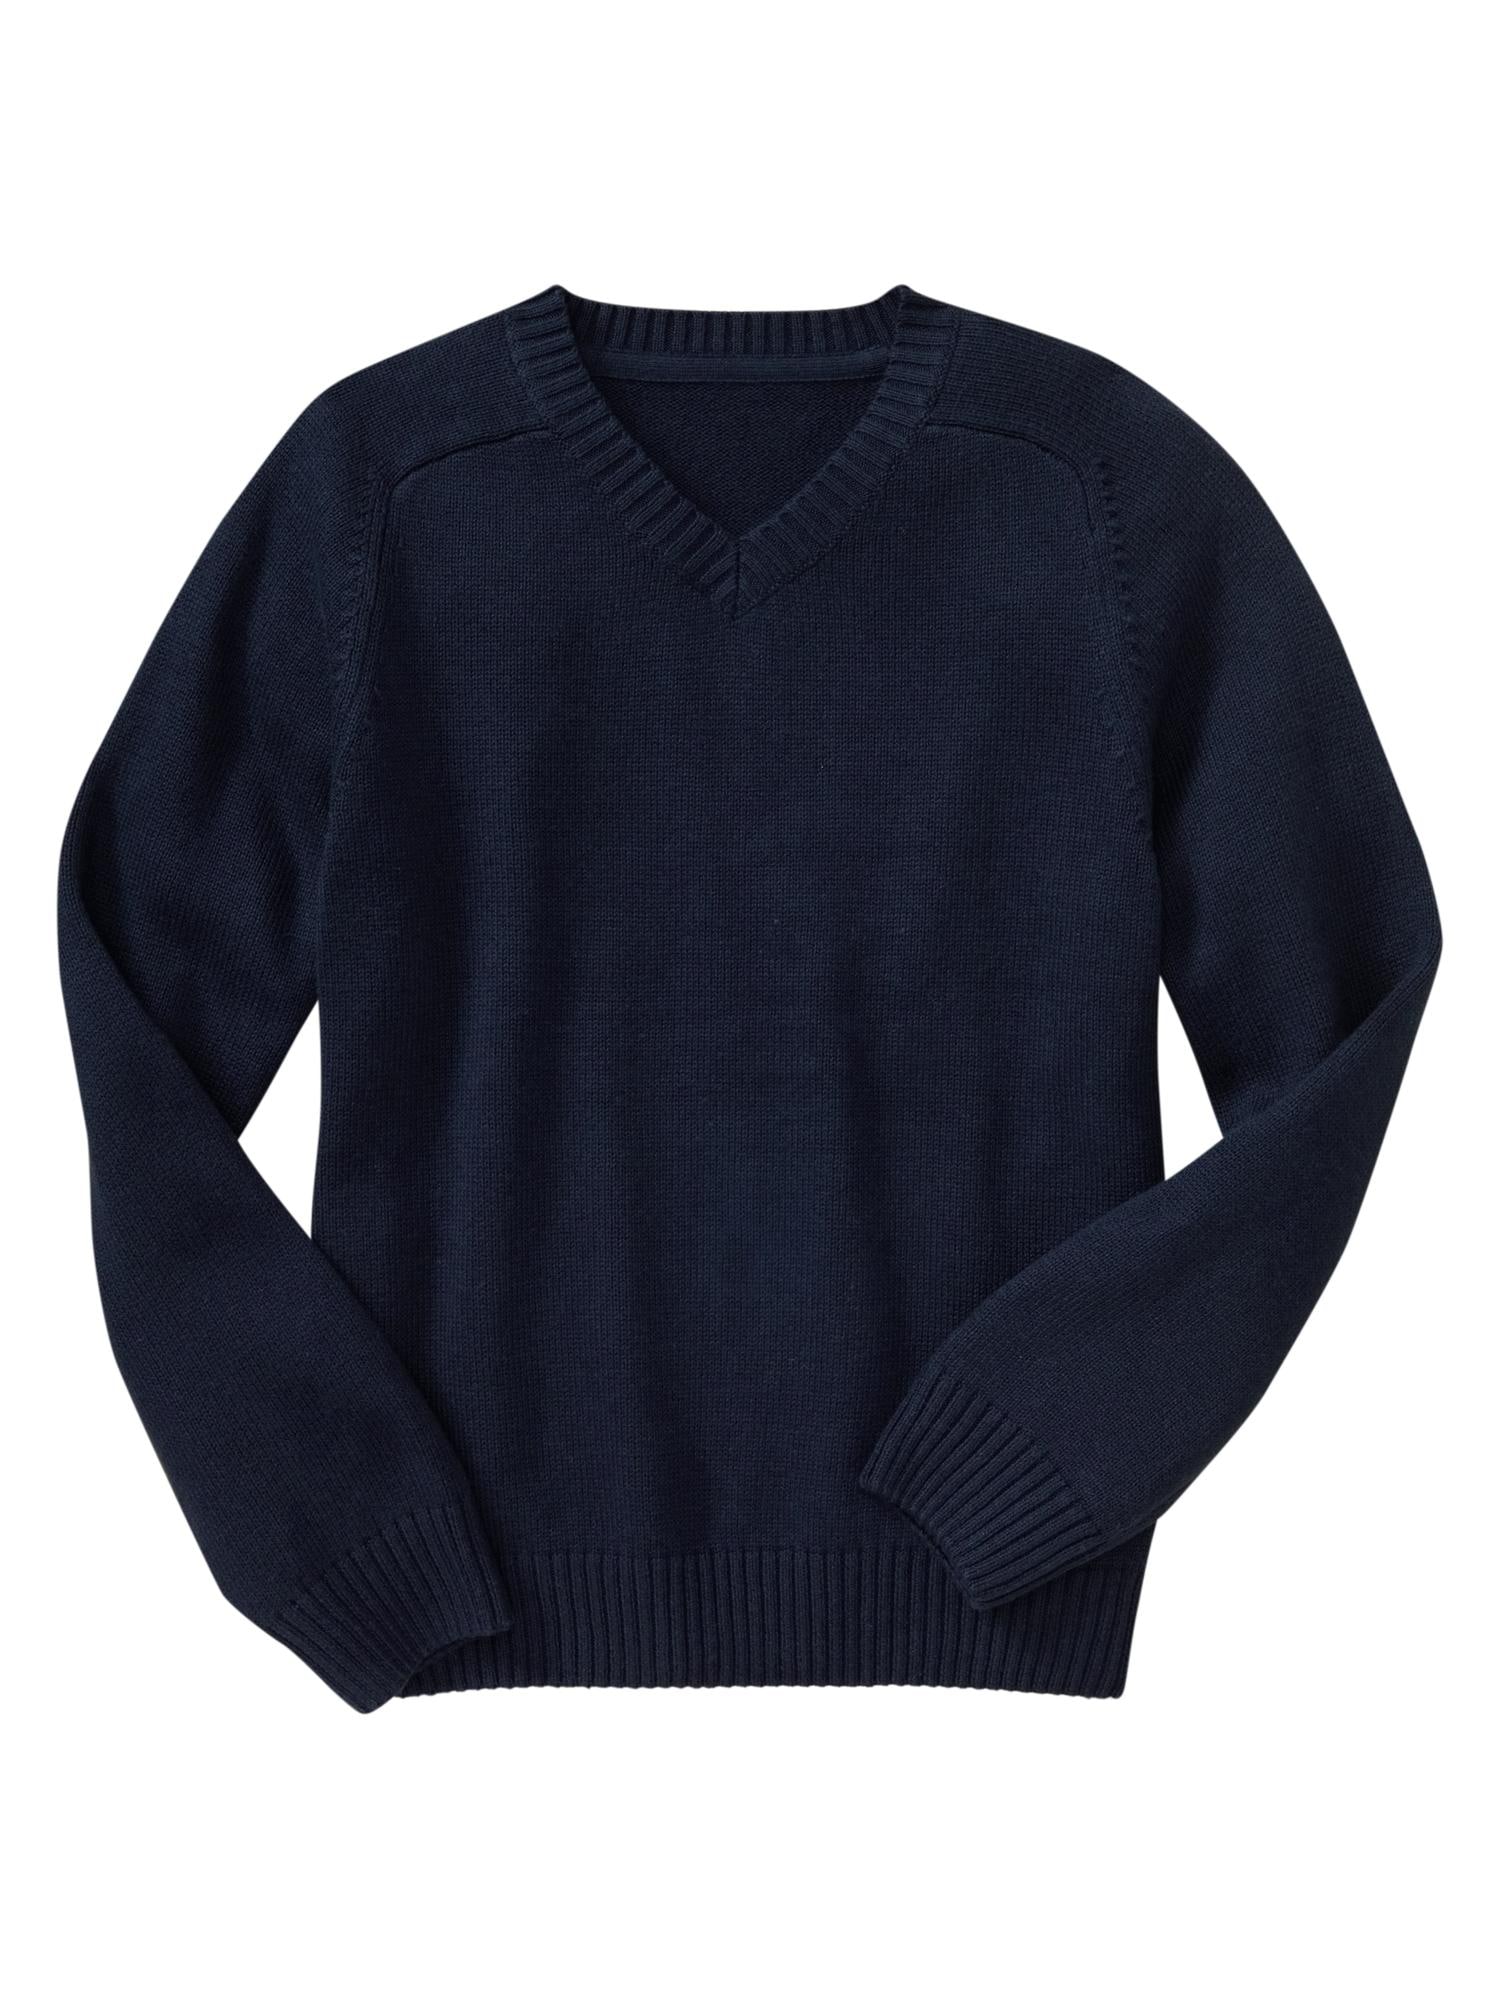 Uniform V-neck sweater | Gap